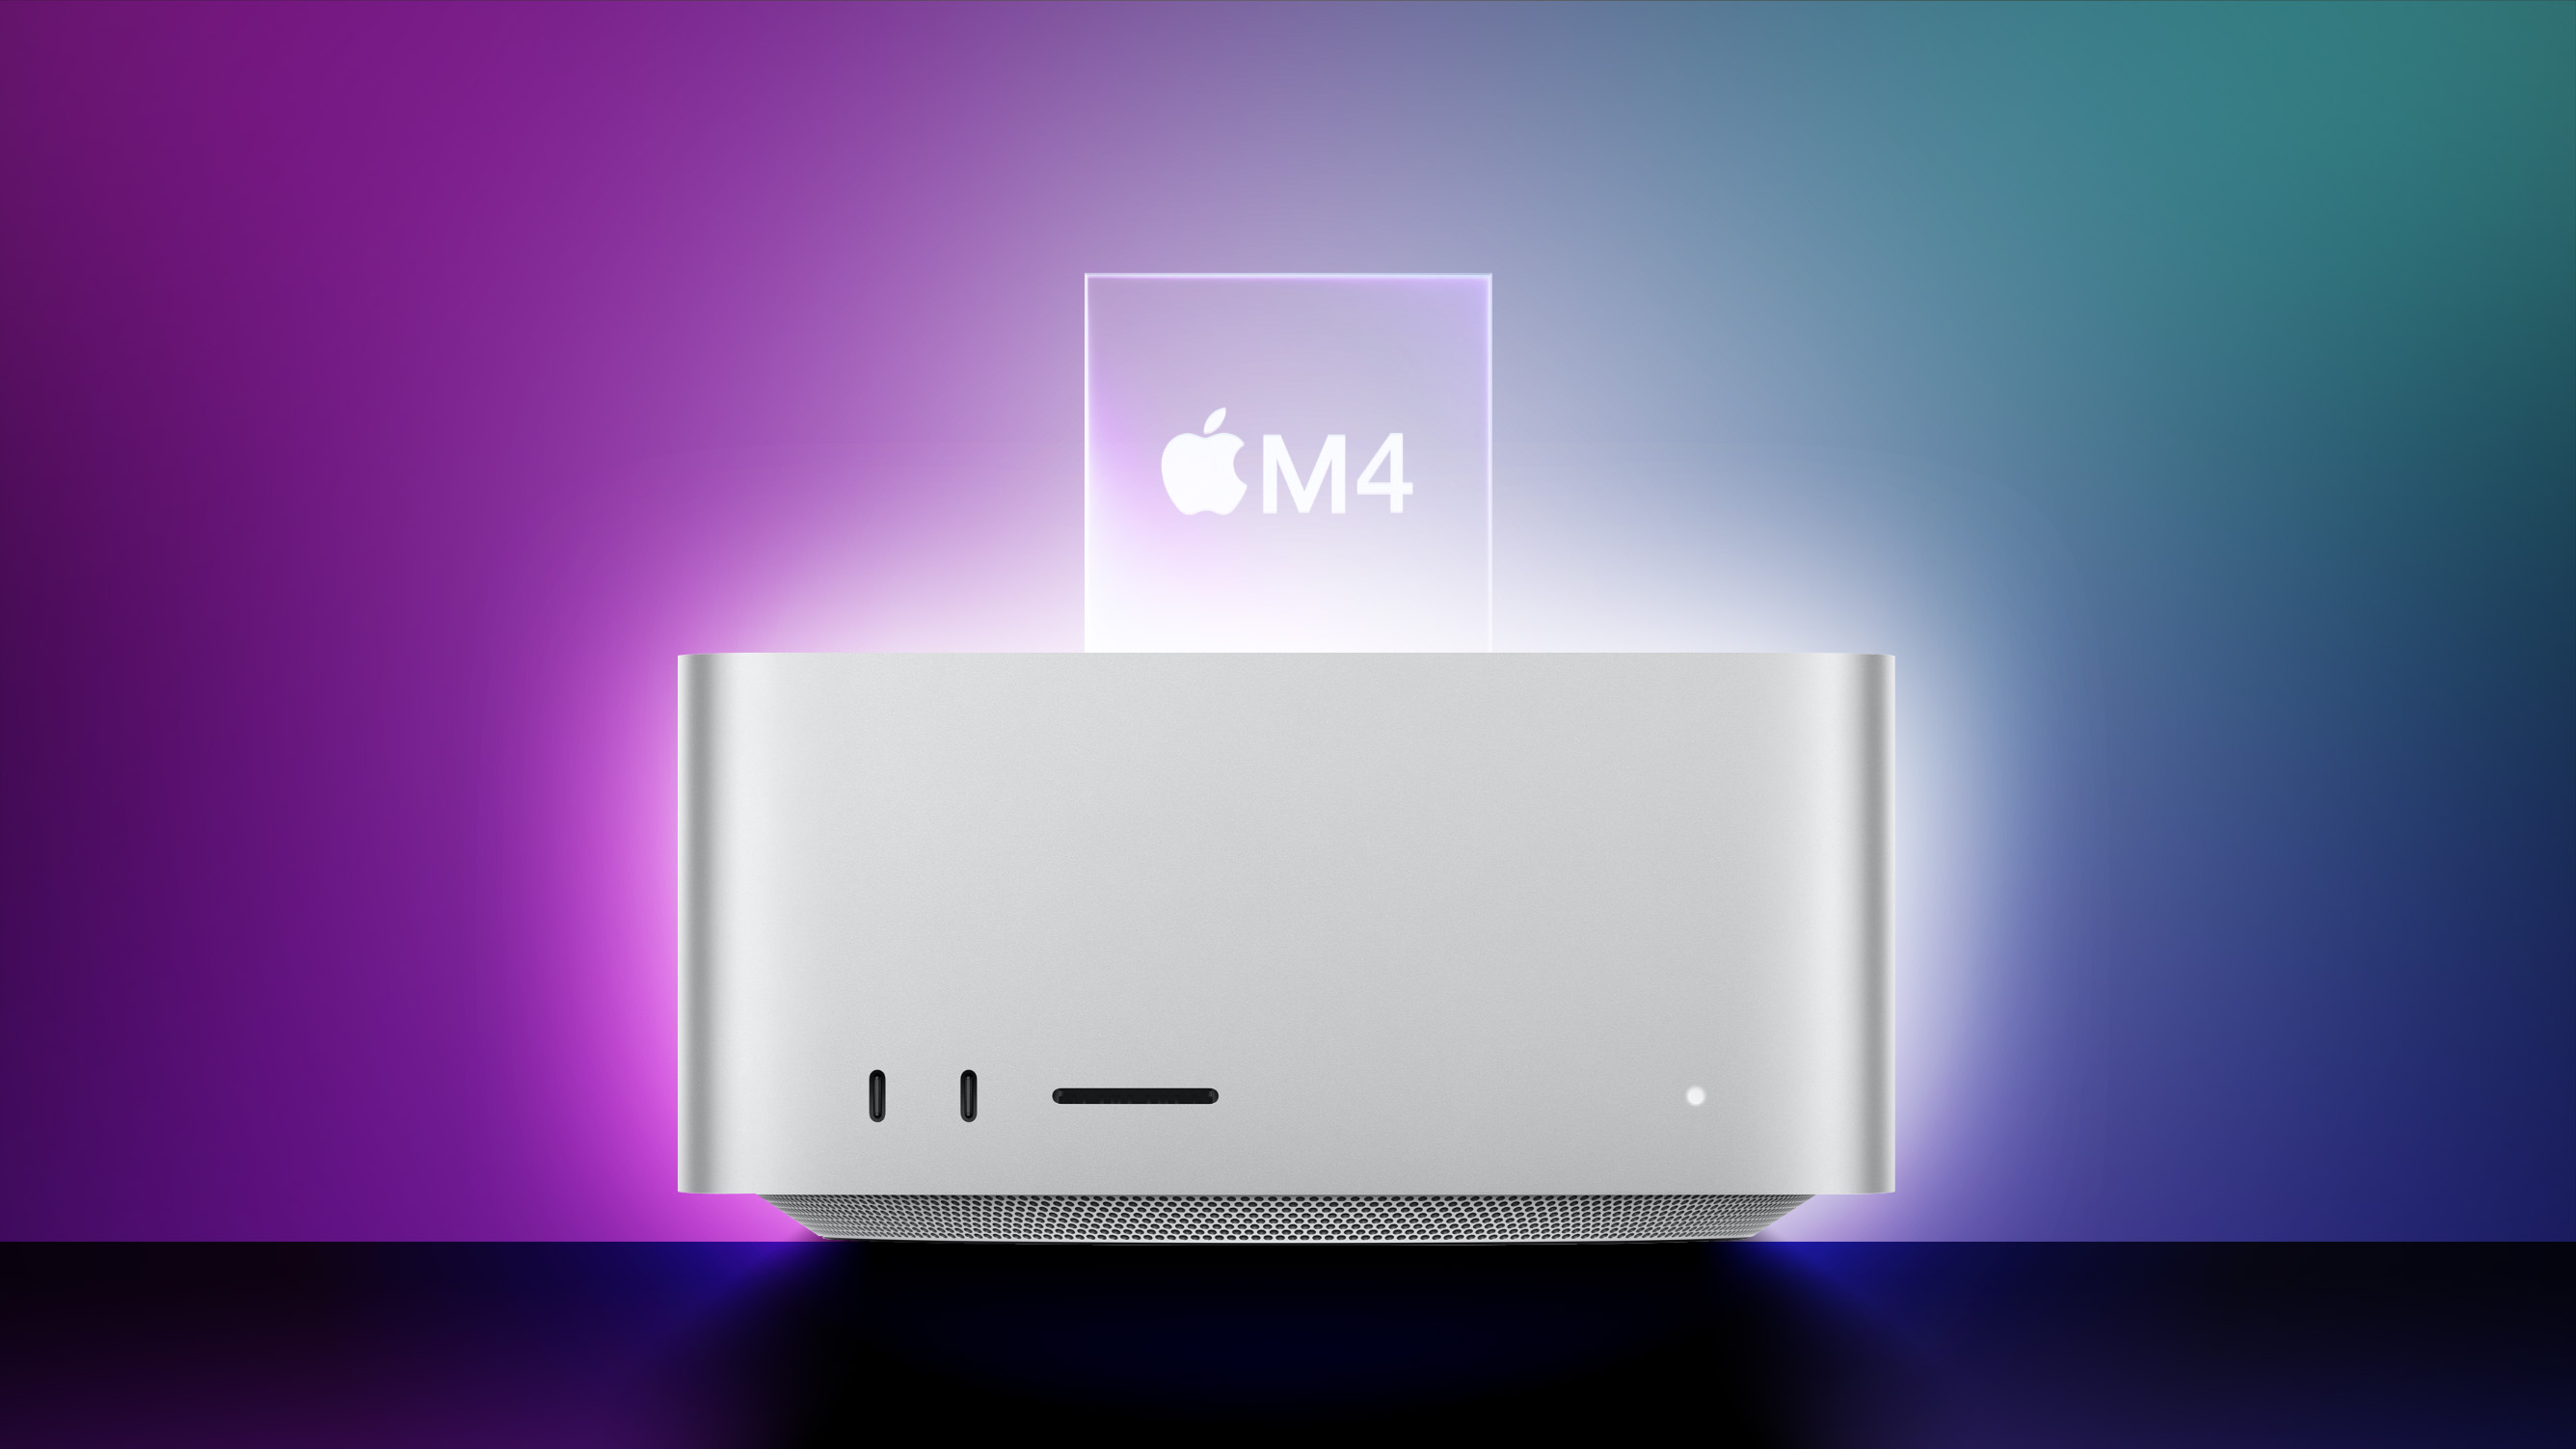 Apple’s M4 Mac Studio: What We Know So Far